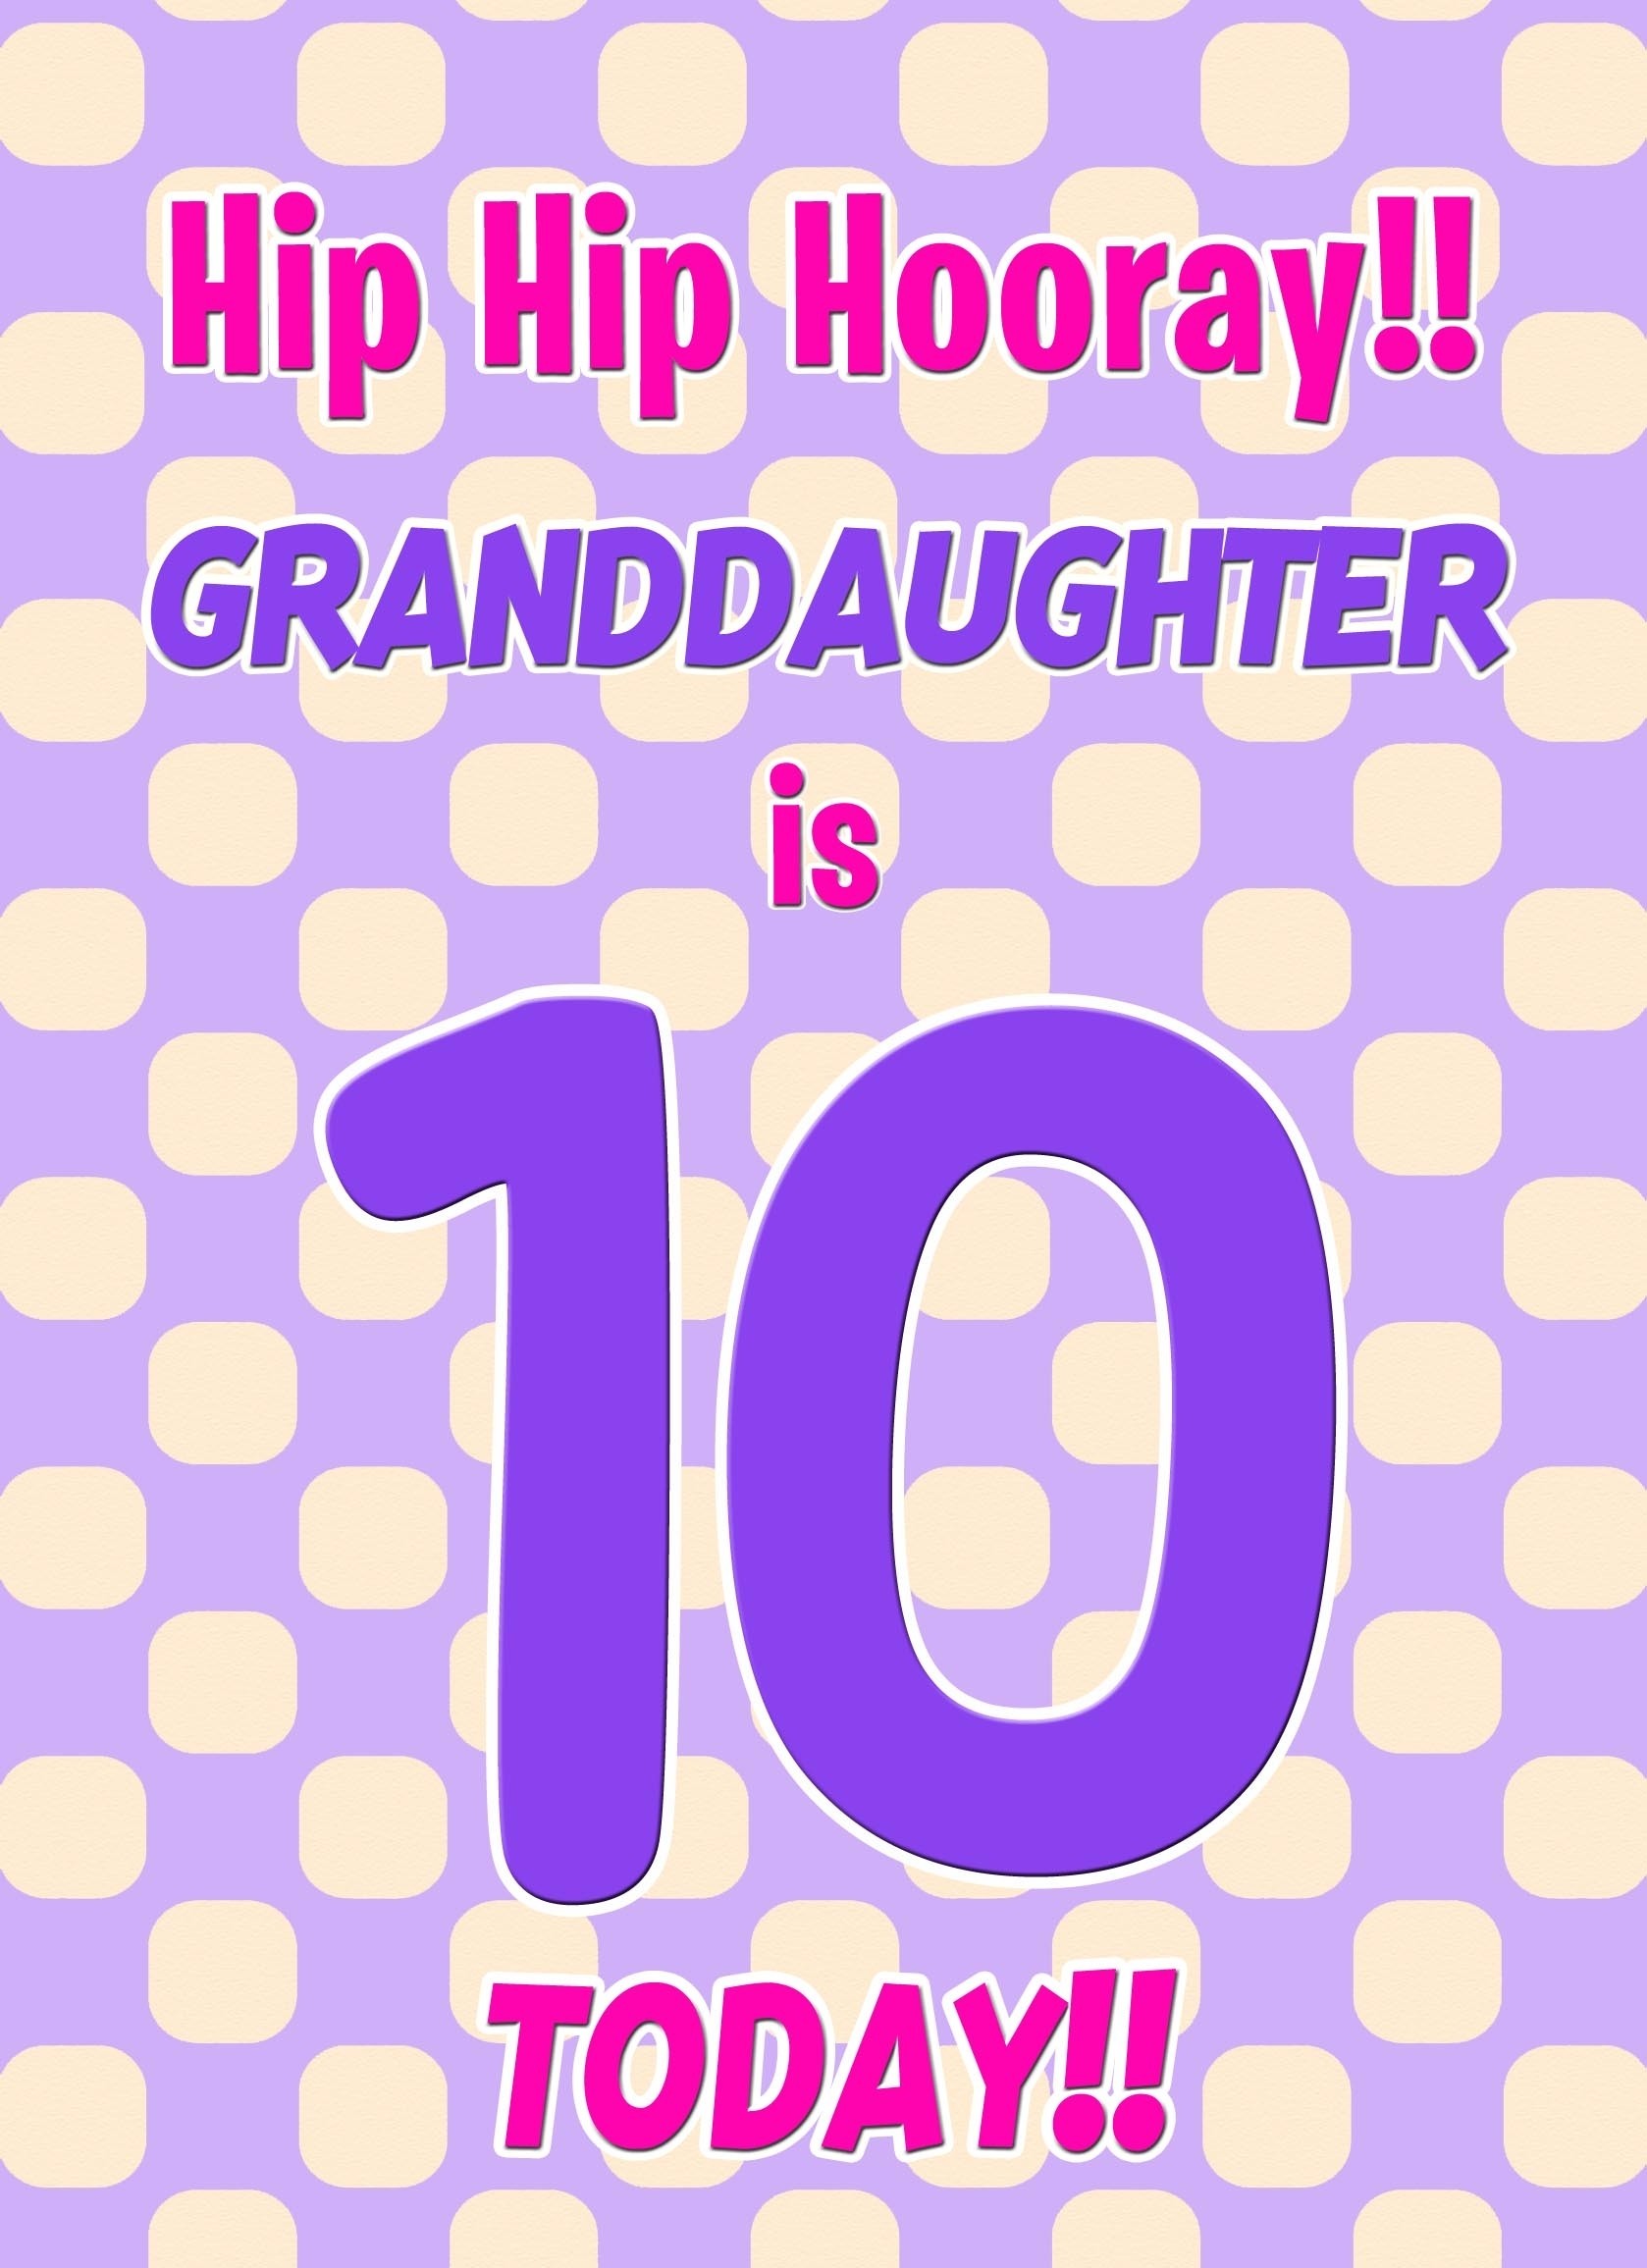 Granddaughter 10th Birthday Card (Purple Spots)